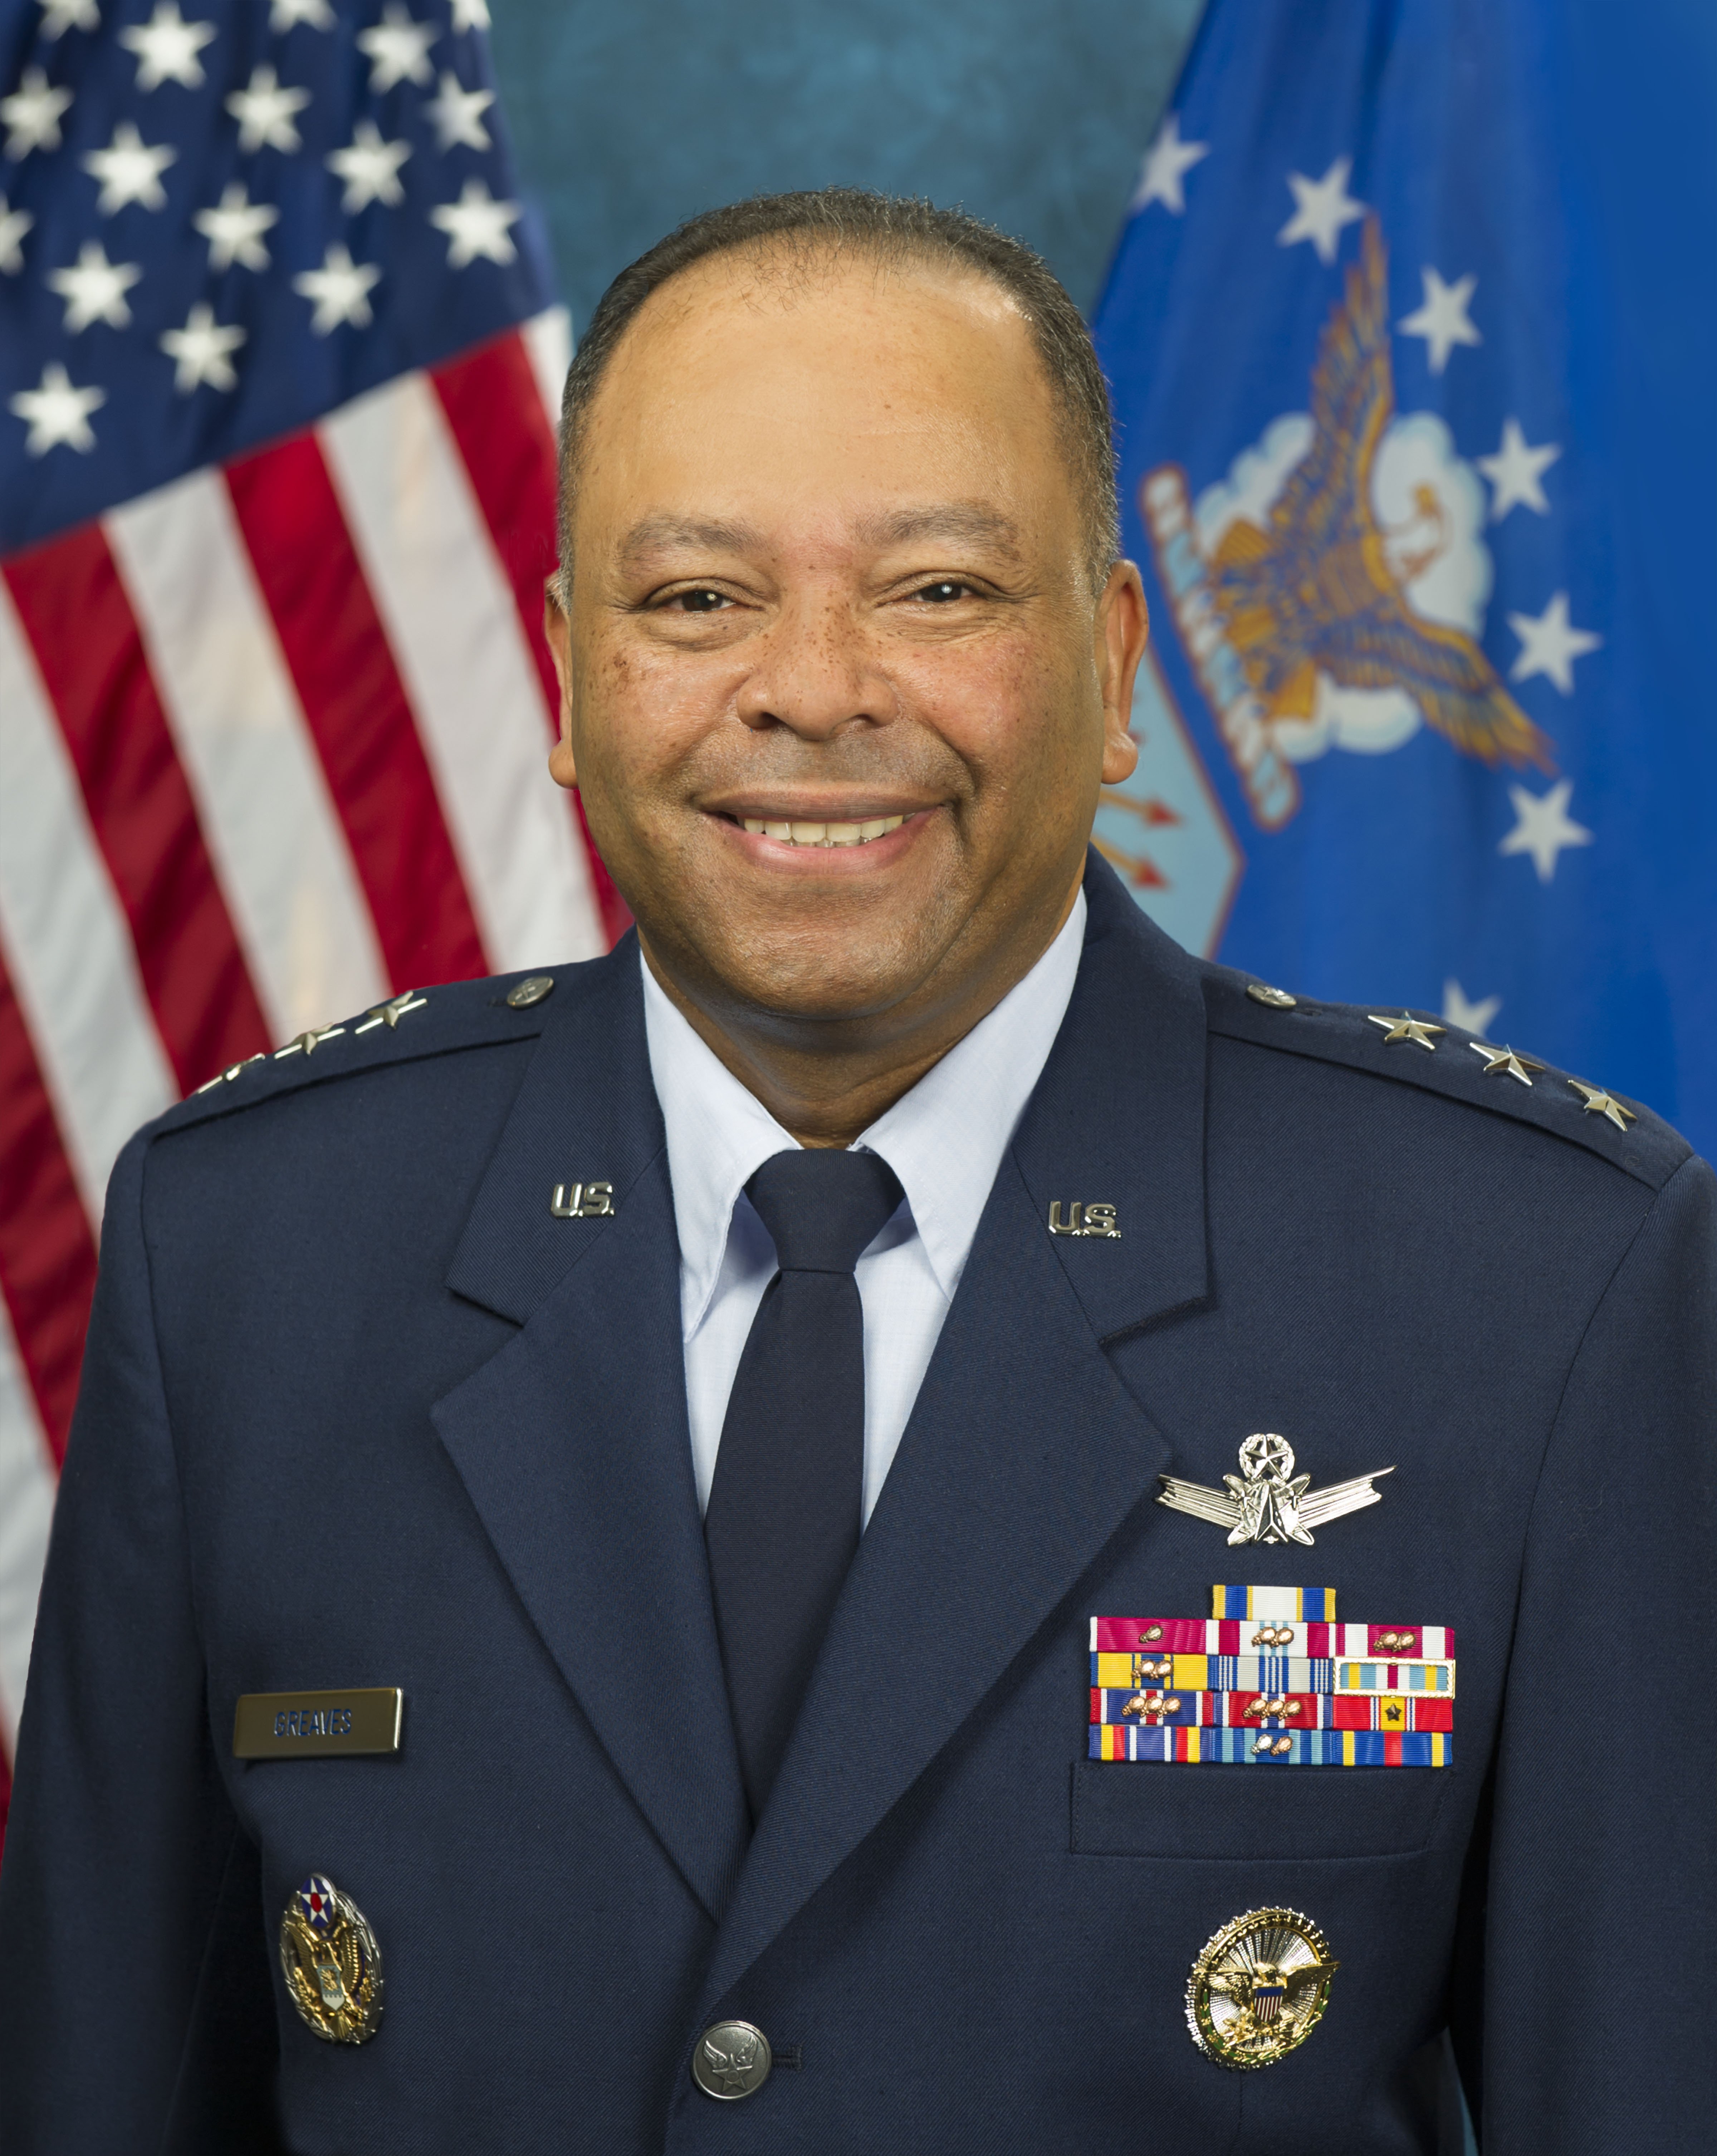 Lt. Gen. Samuel A. Greaves